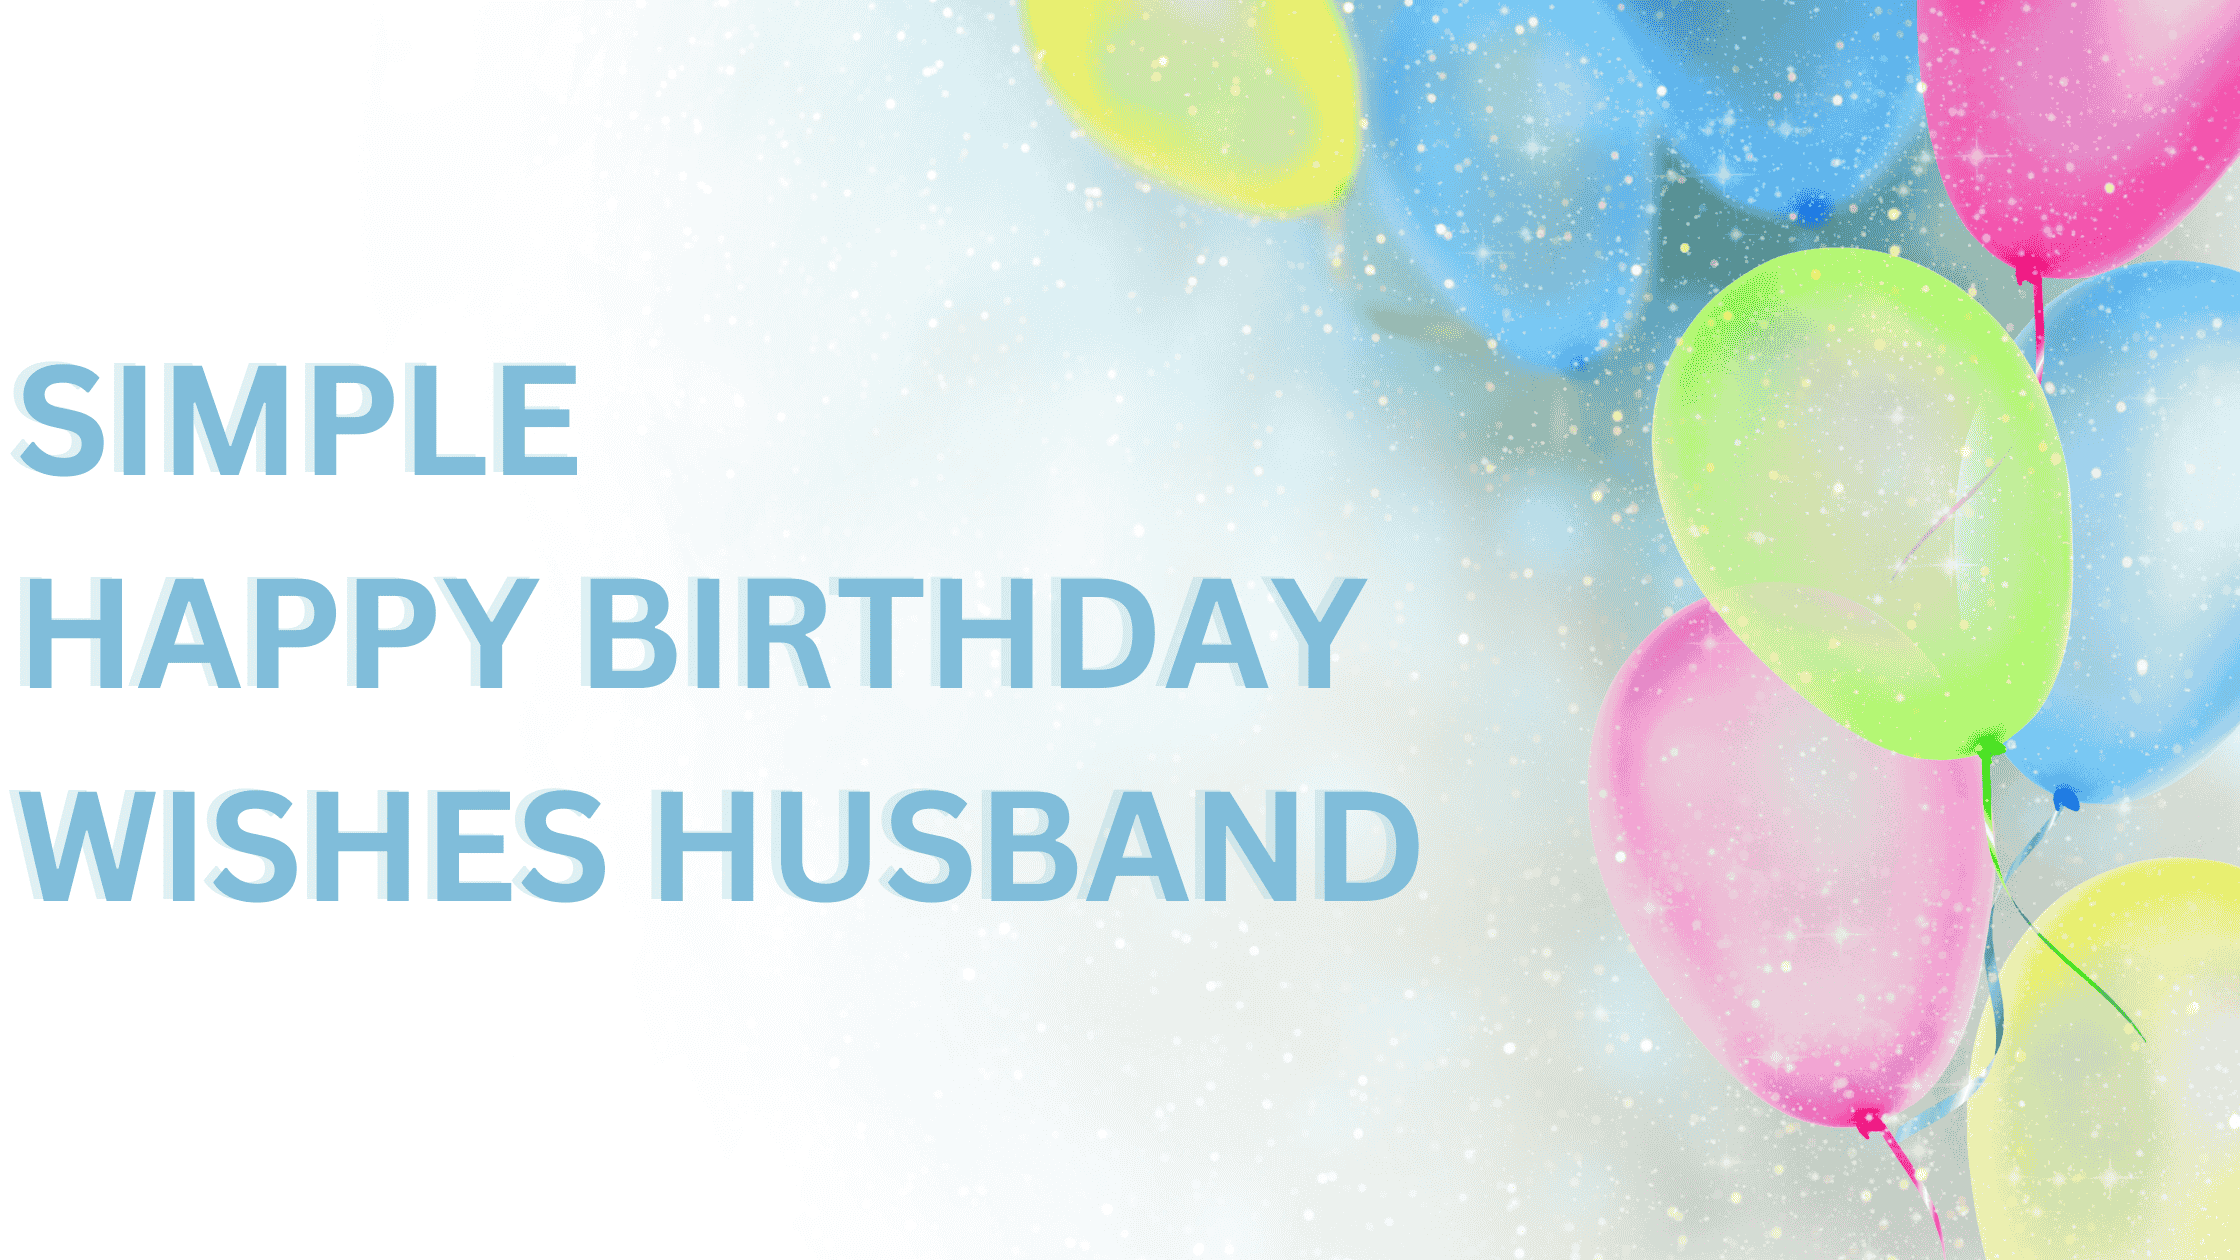 Simple Happy Birthday Wishes Husband